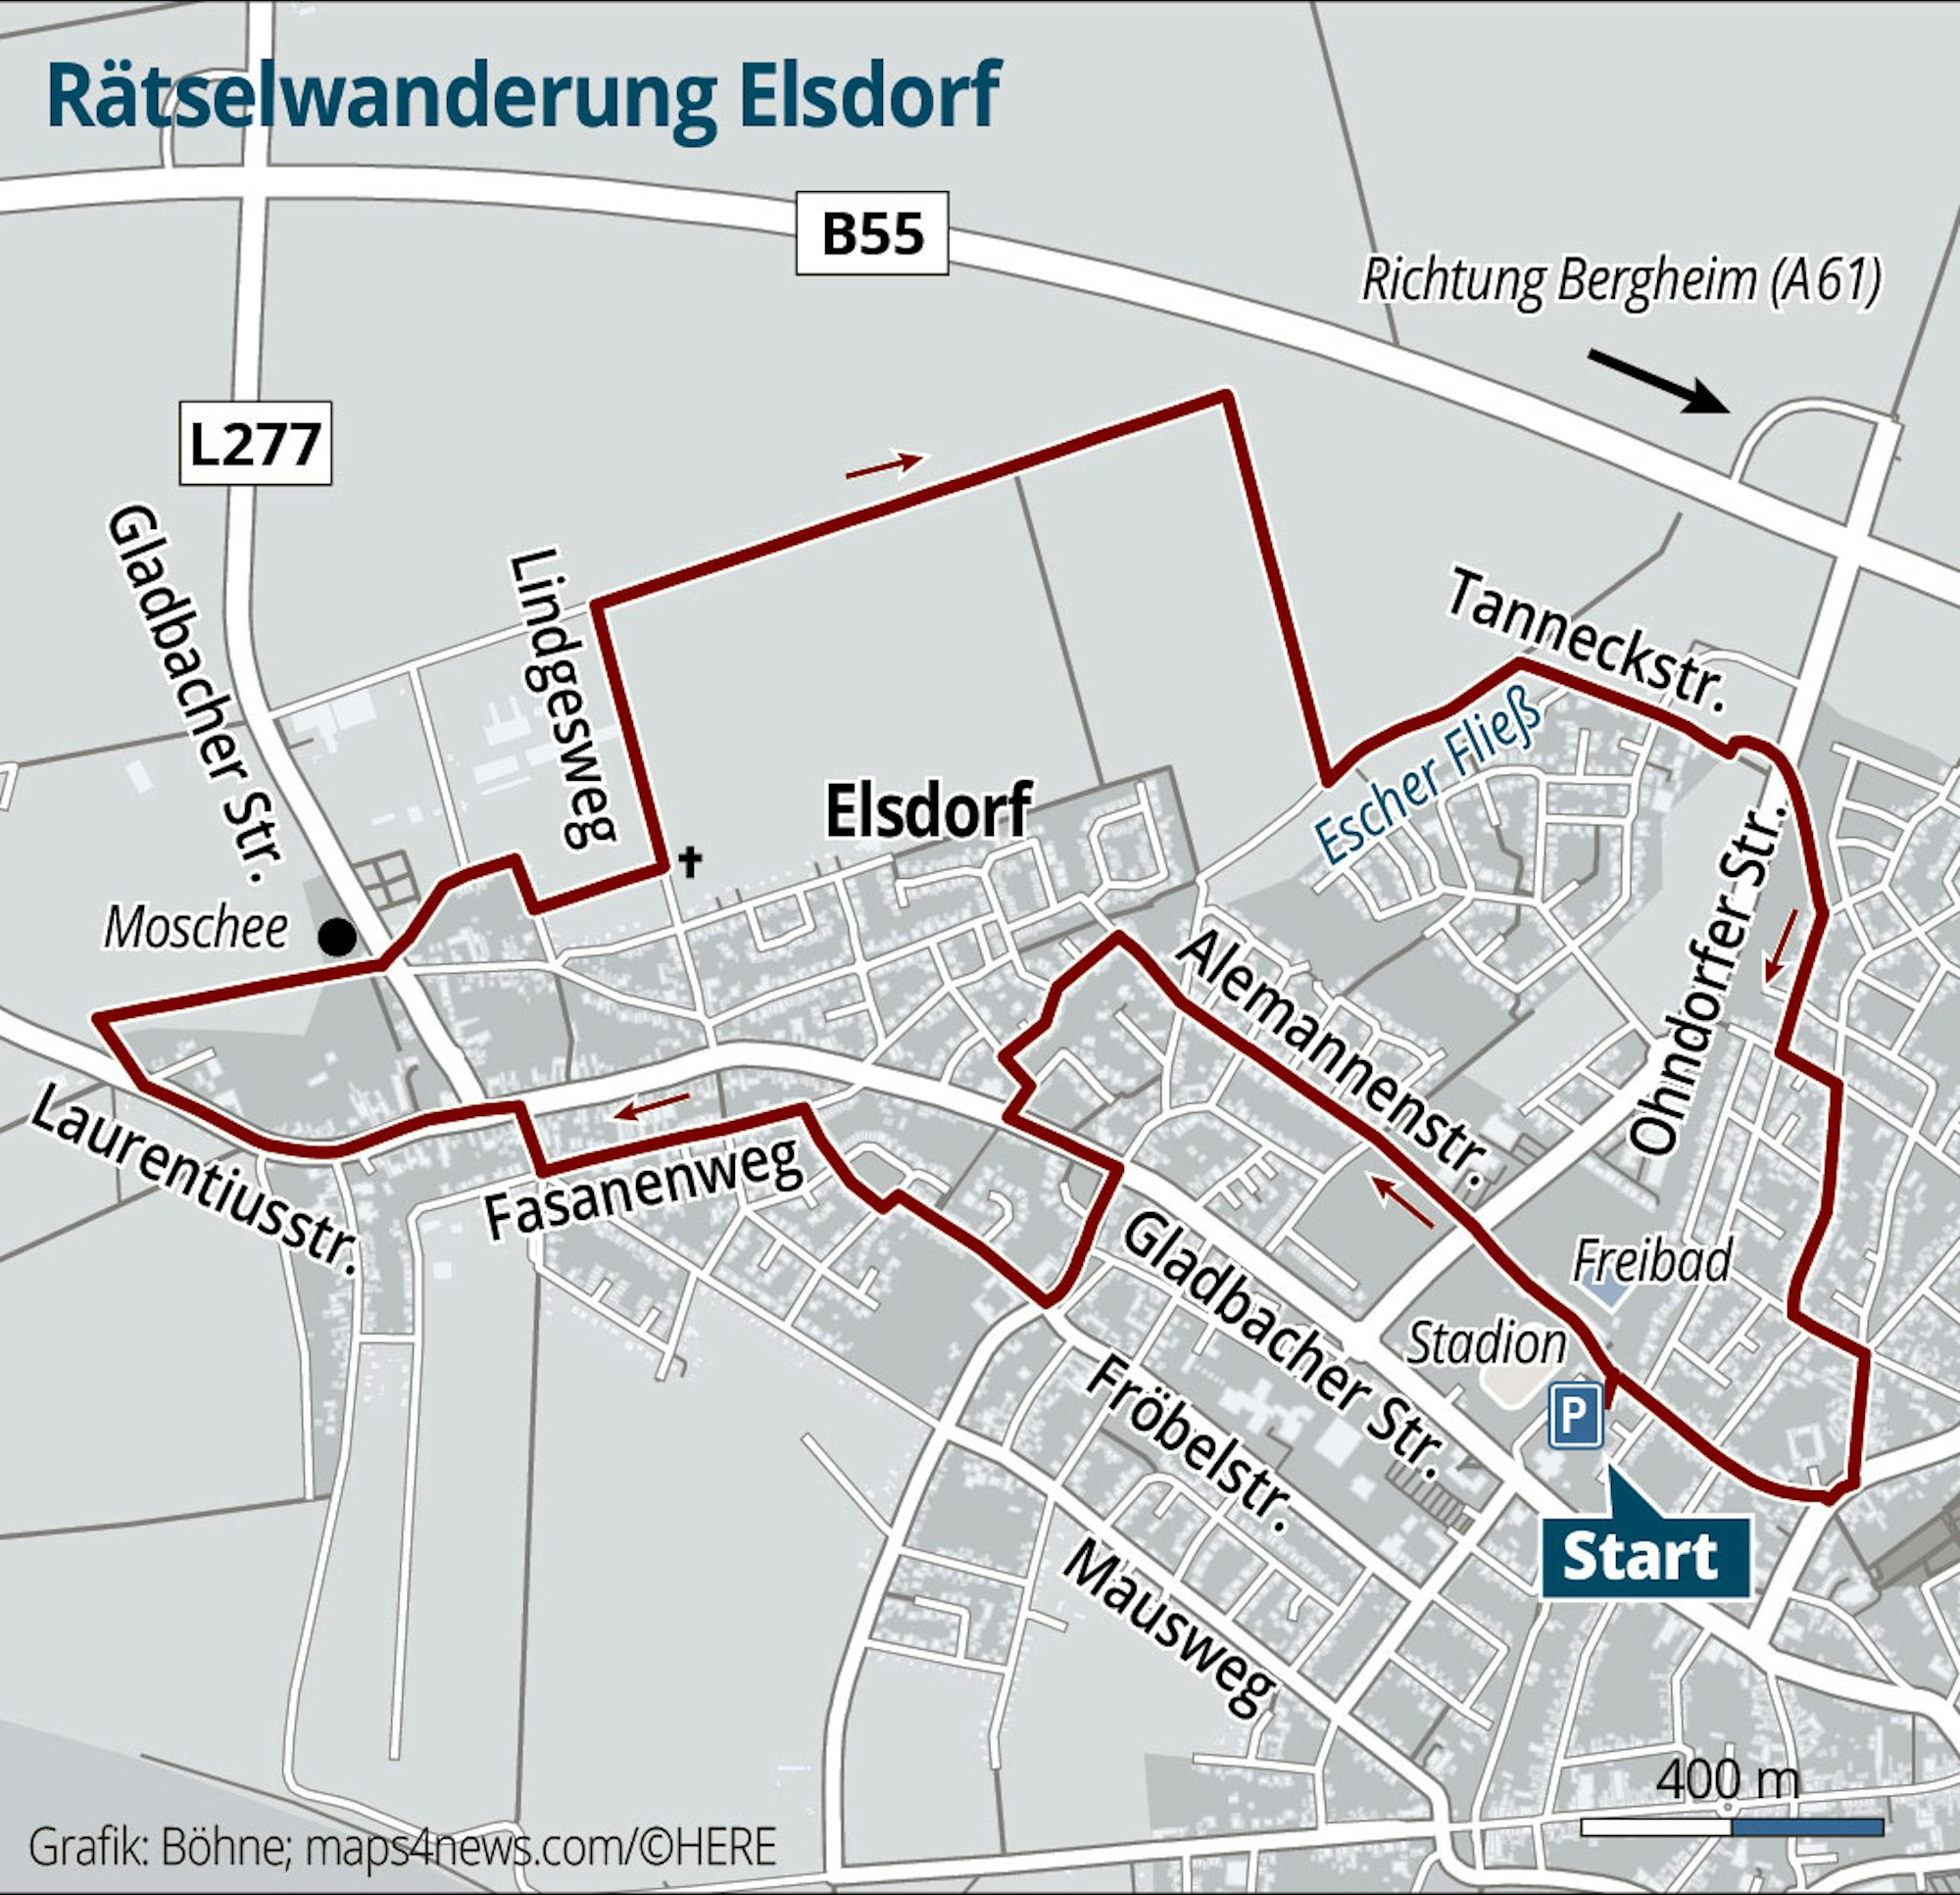 Rätselwanderung Elsdorf